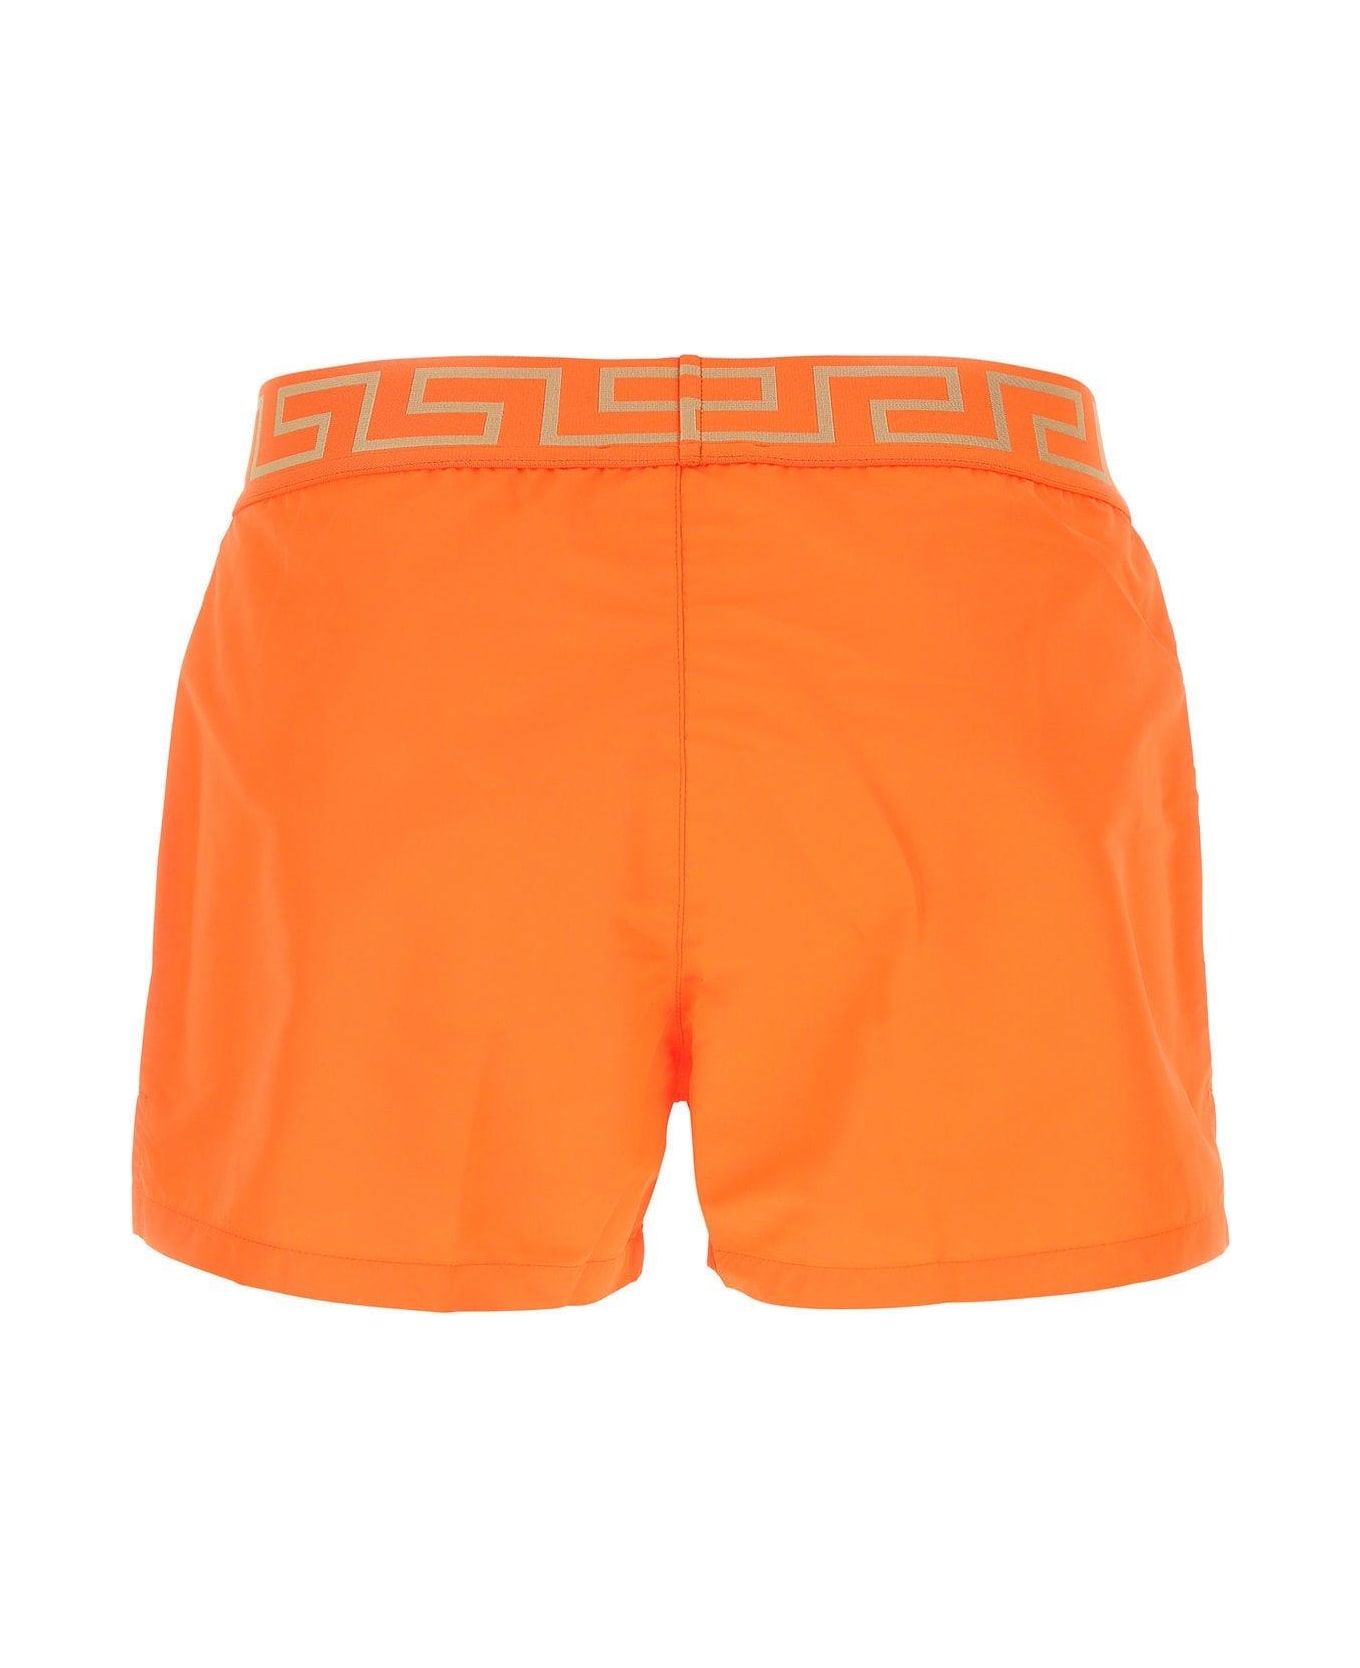 Versace Orange Polyester Swimming Shorts - Arancione